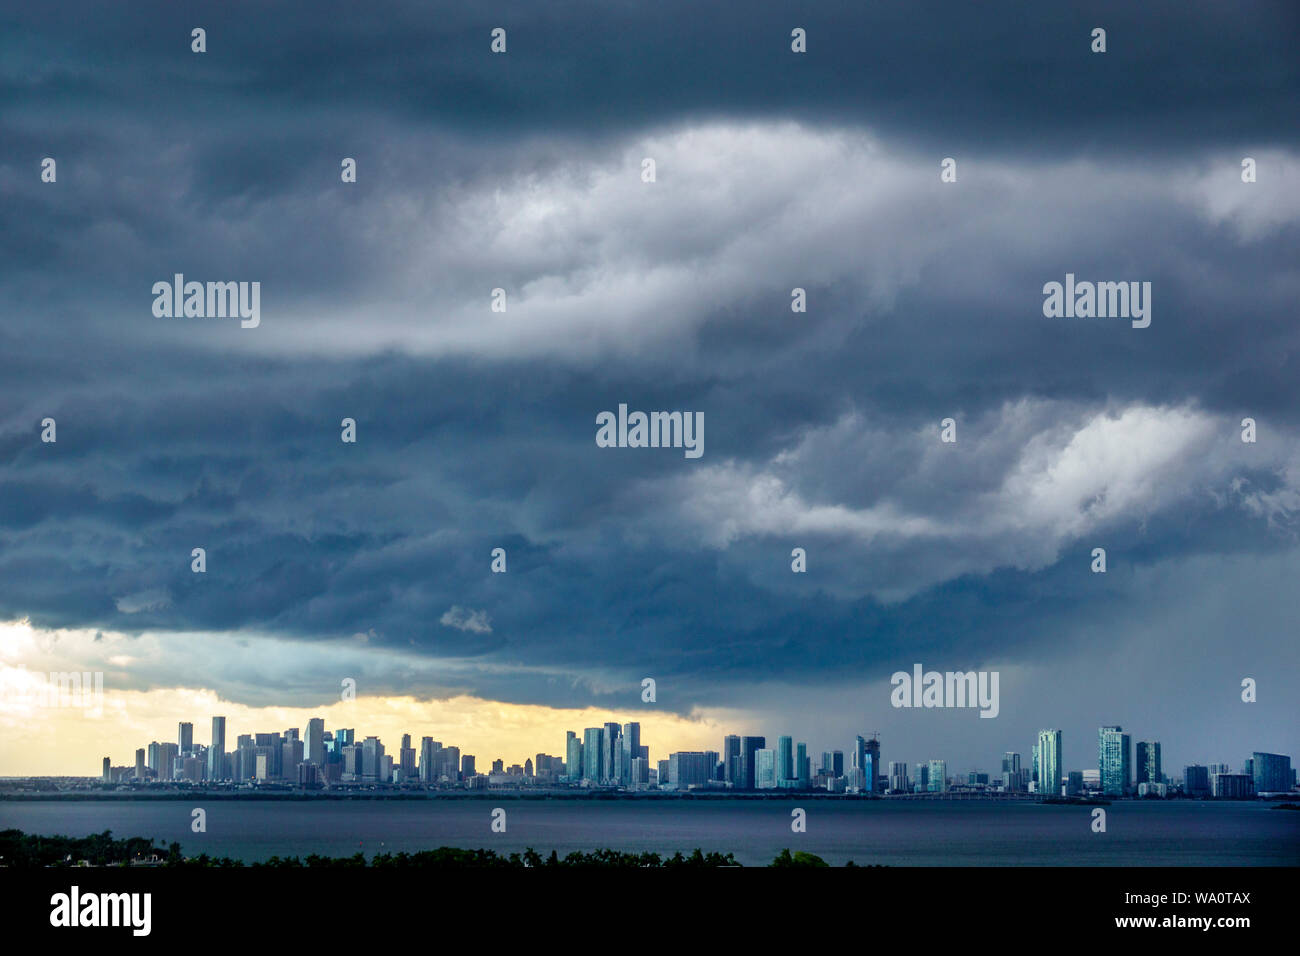 Miami Beach Florida,dark clouds weather sky storm clouds gathering,rain,city skyline,Biscayne Bay,FL190731008 Stock Photo